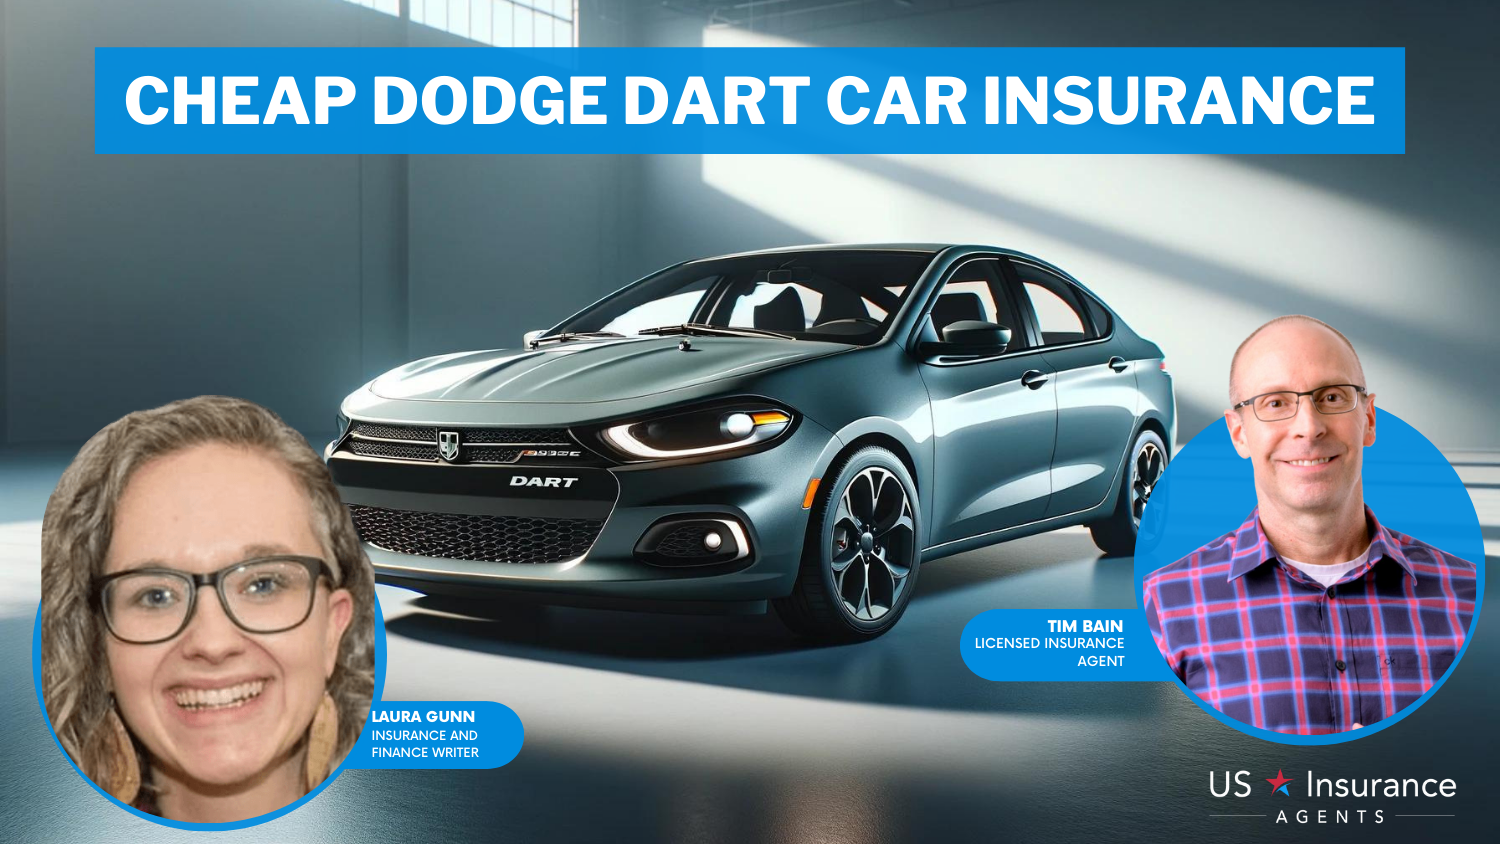 Cheap Dodge Dart Car Insurance: State Farm, USAA and American Family